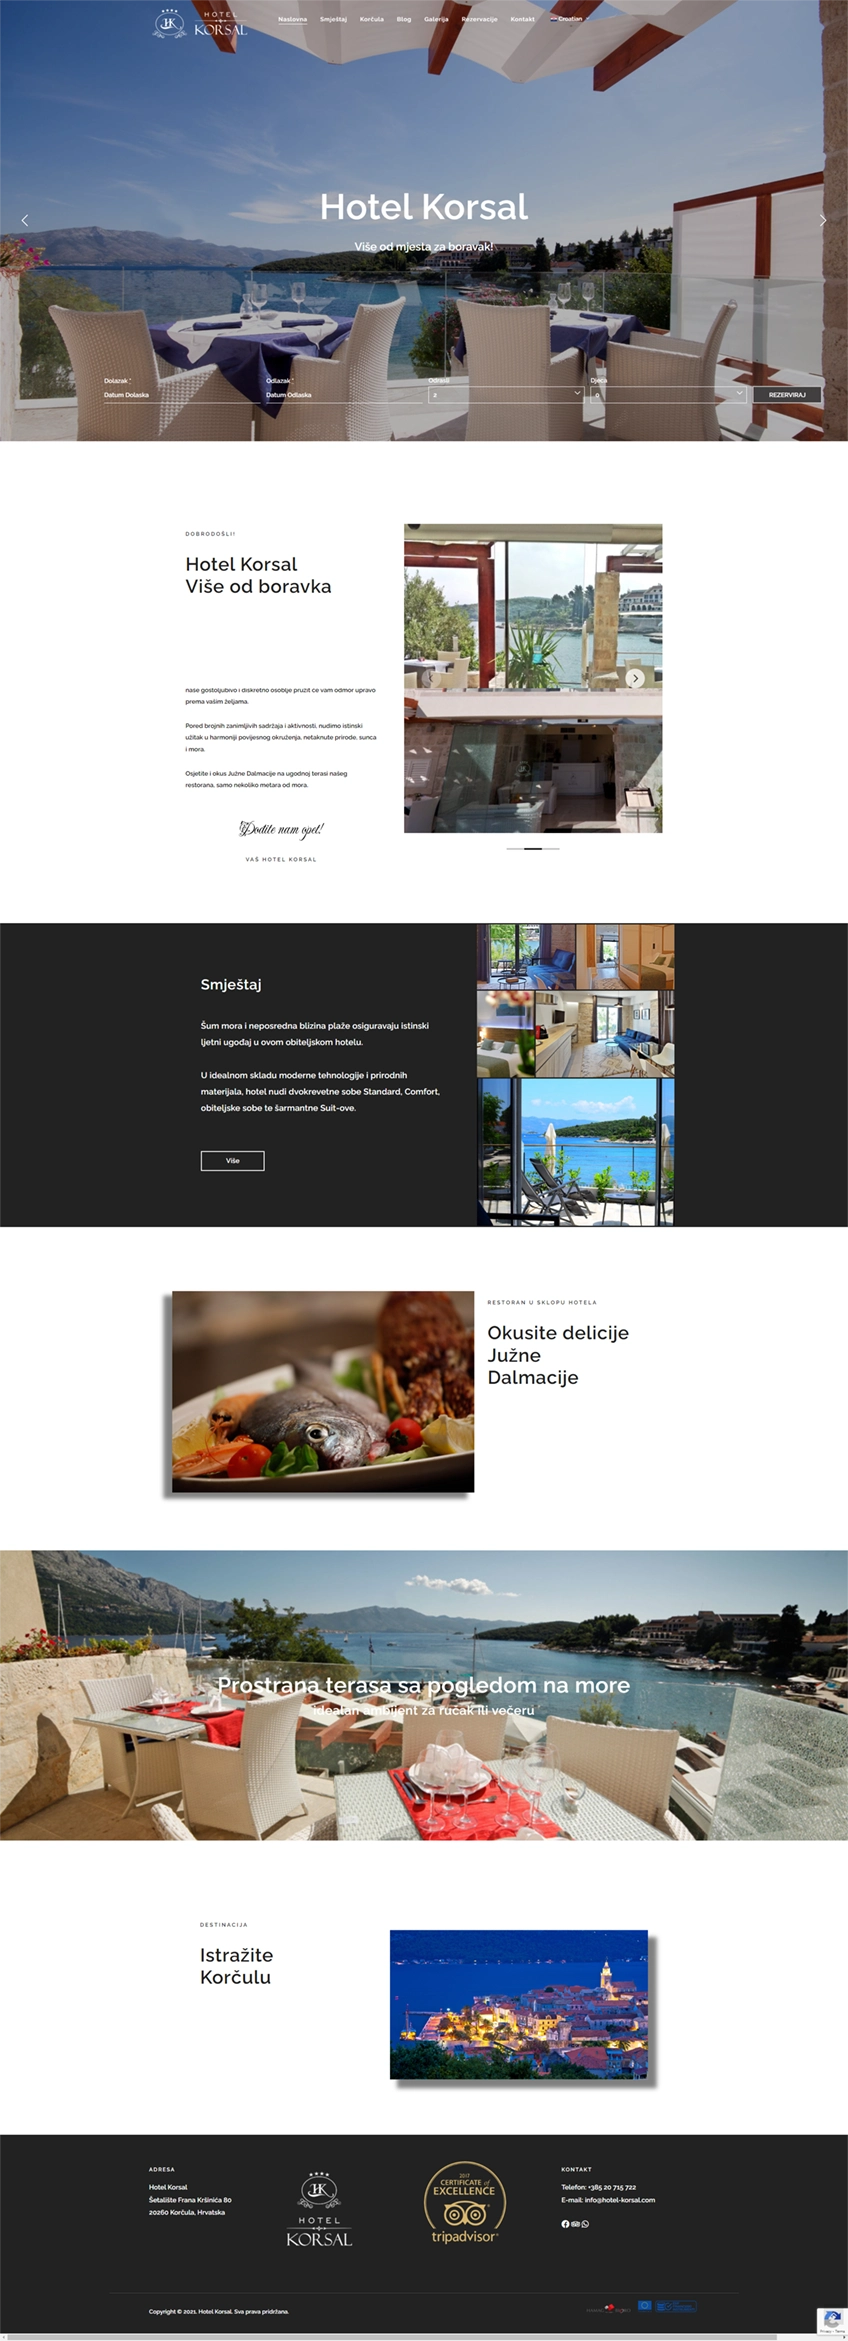 kuhada webdesign hotel korsal 2023 03 13 09 57 06 copy